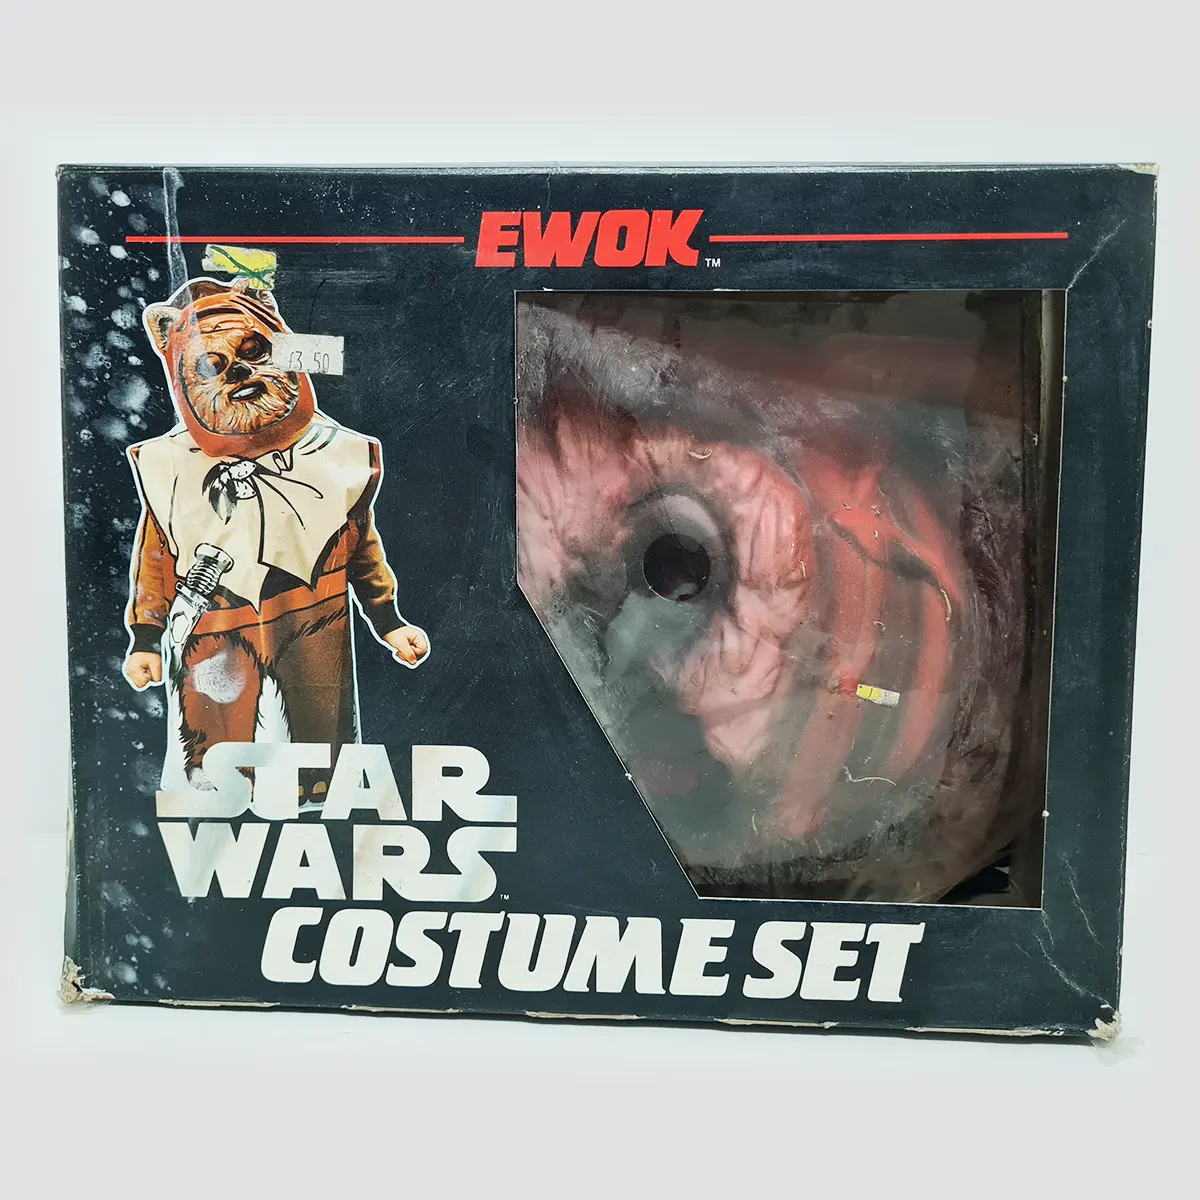 Star Wars Costume Set Ewok